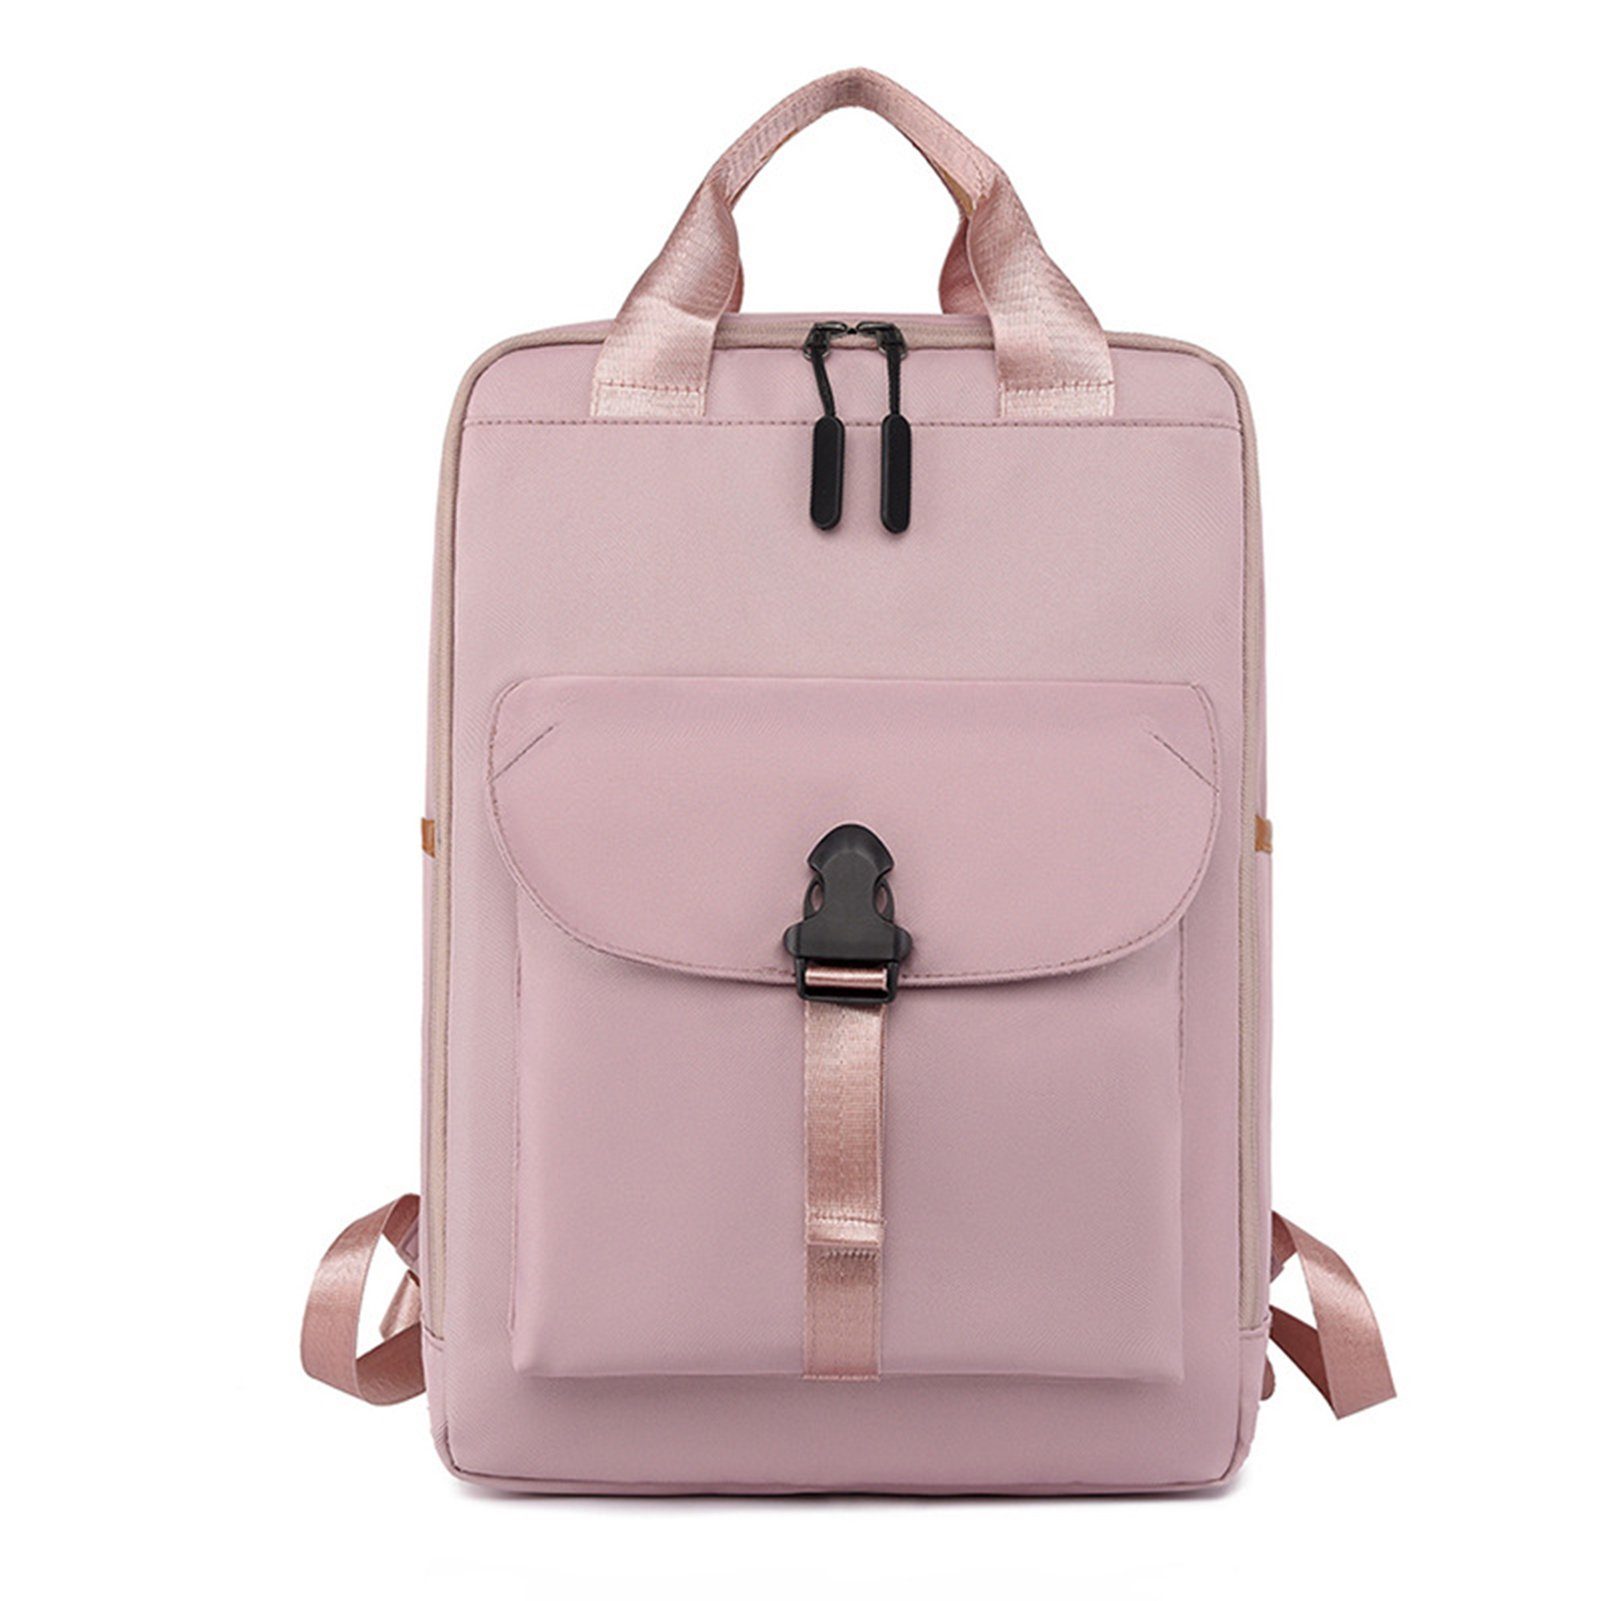 Rucksack, Großes Freizeitrucksack Backpack, Damen Rucksack Mode-Reiserucksack, Blusmart pink